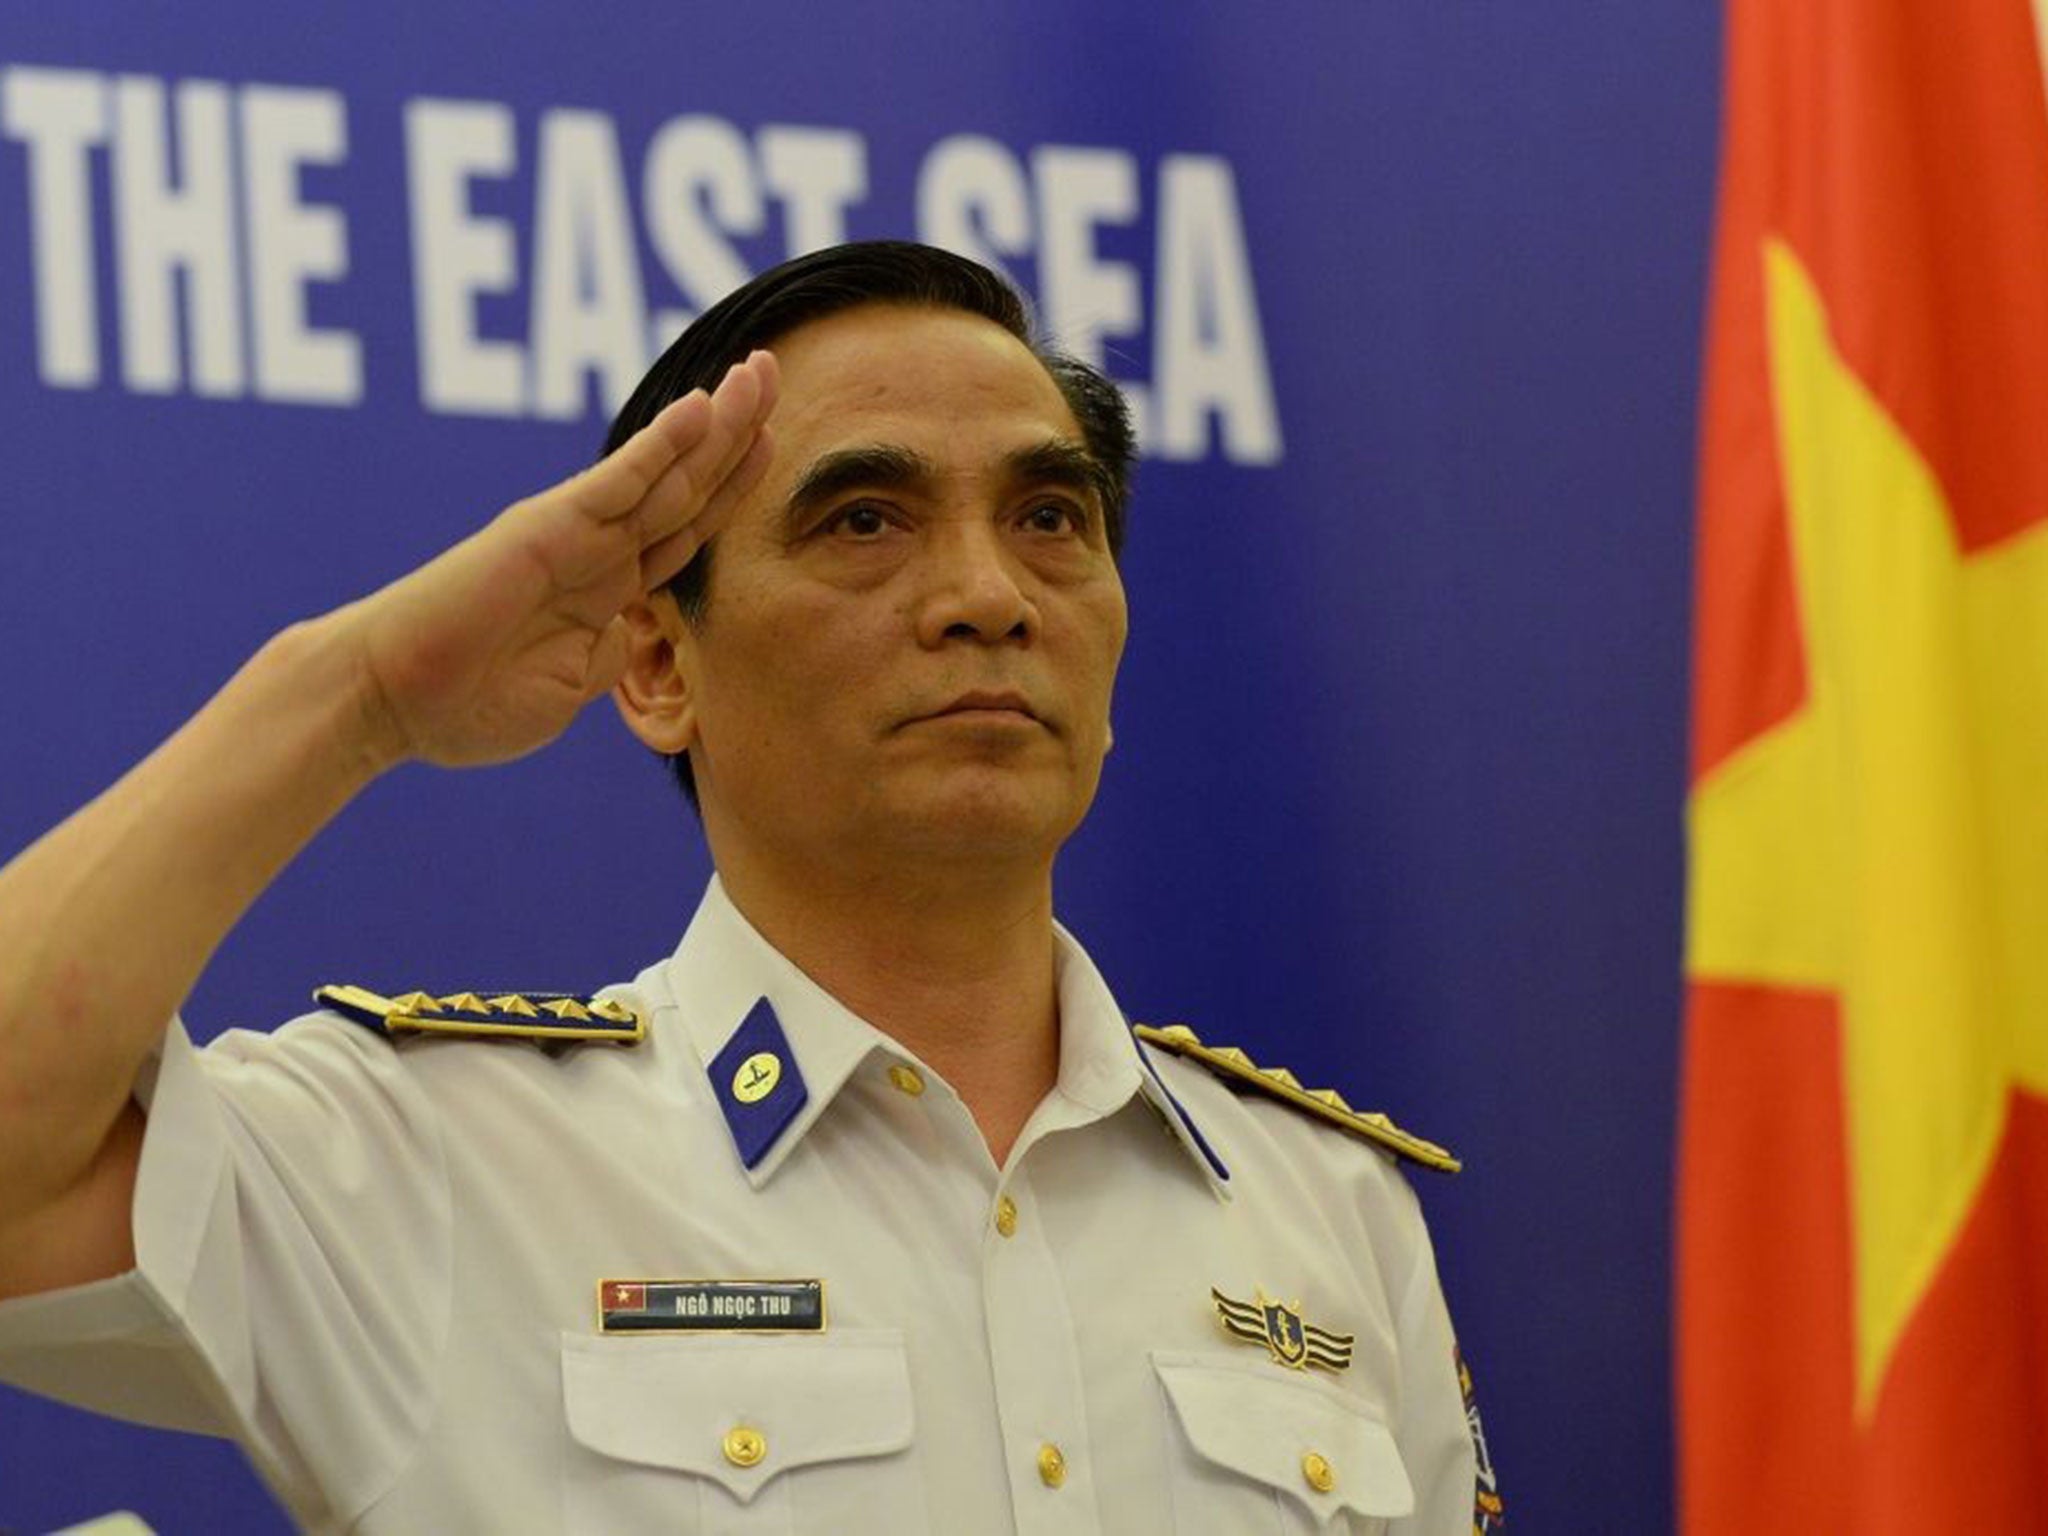 Ngo Ngoc Thu, Vietnam Coast Guard's deputy commander at a press conference on the tensions last week